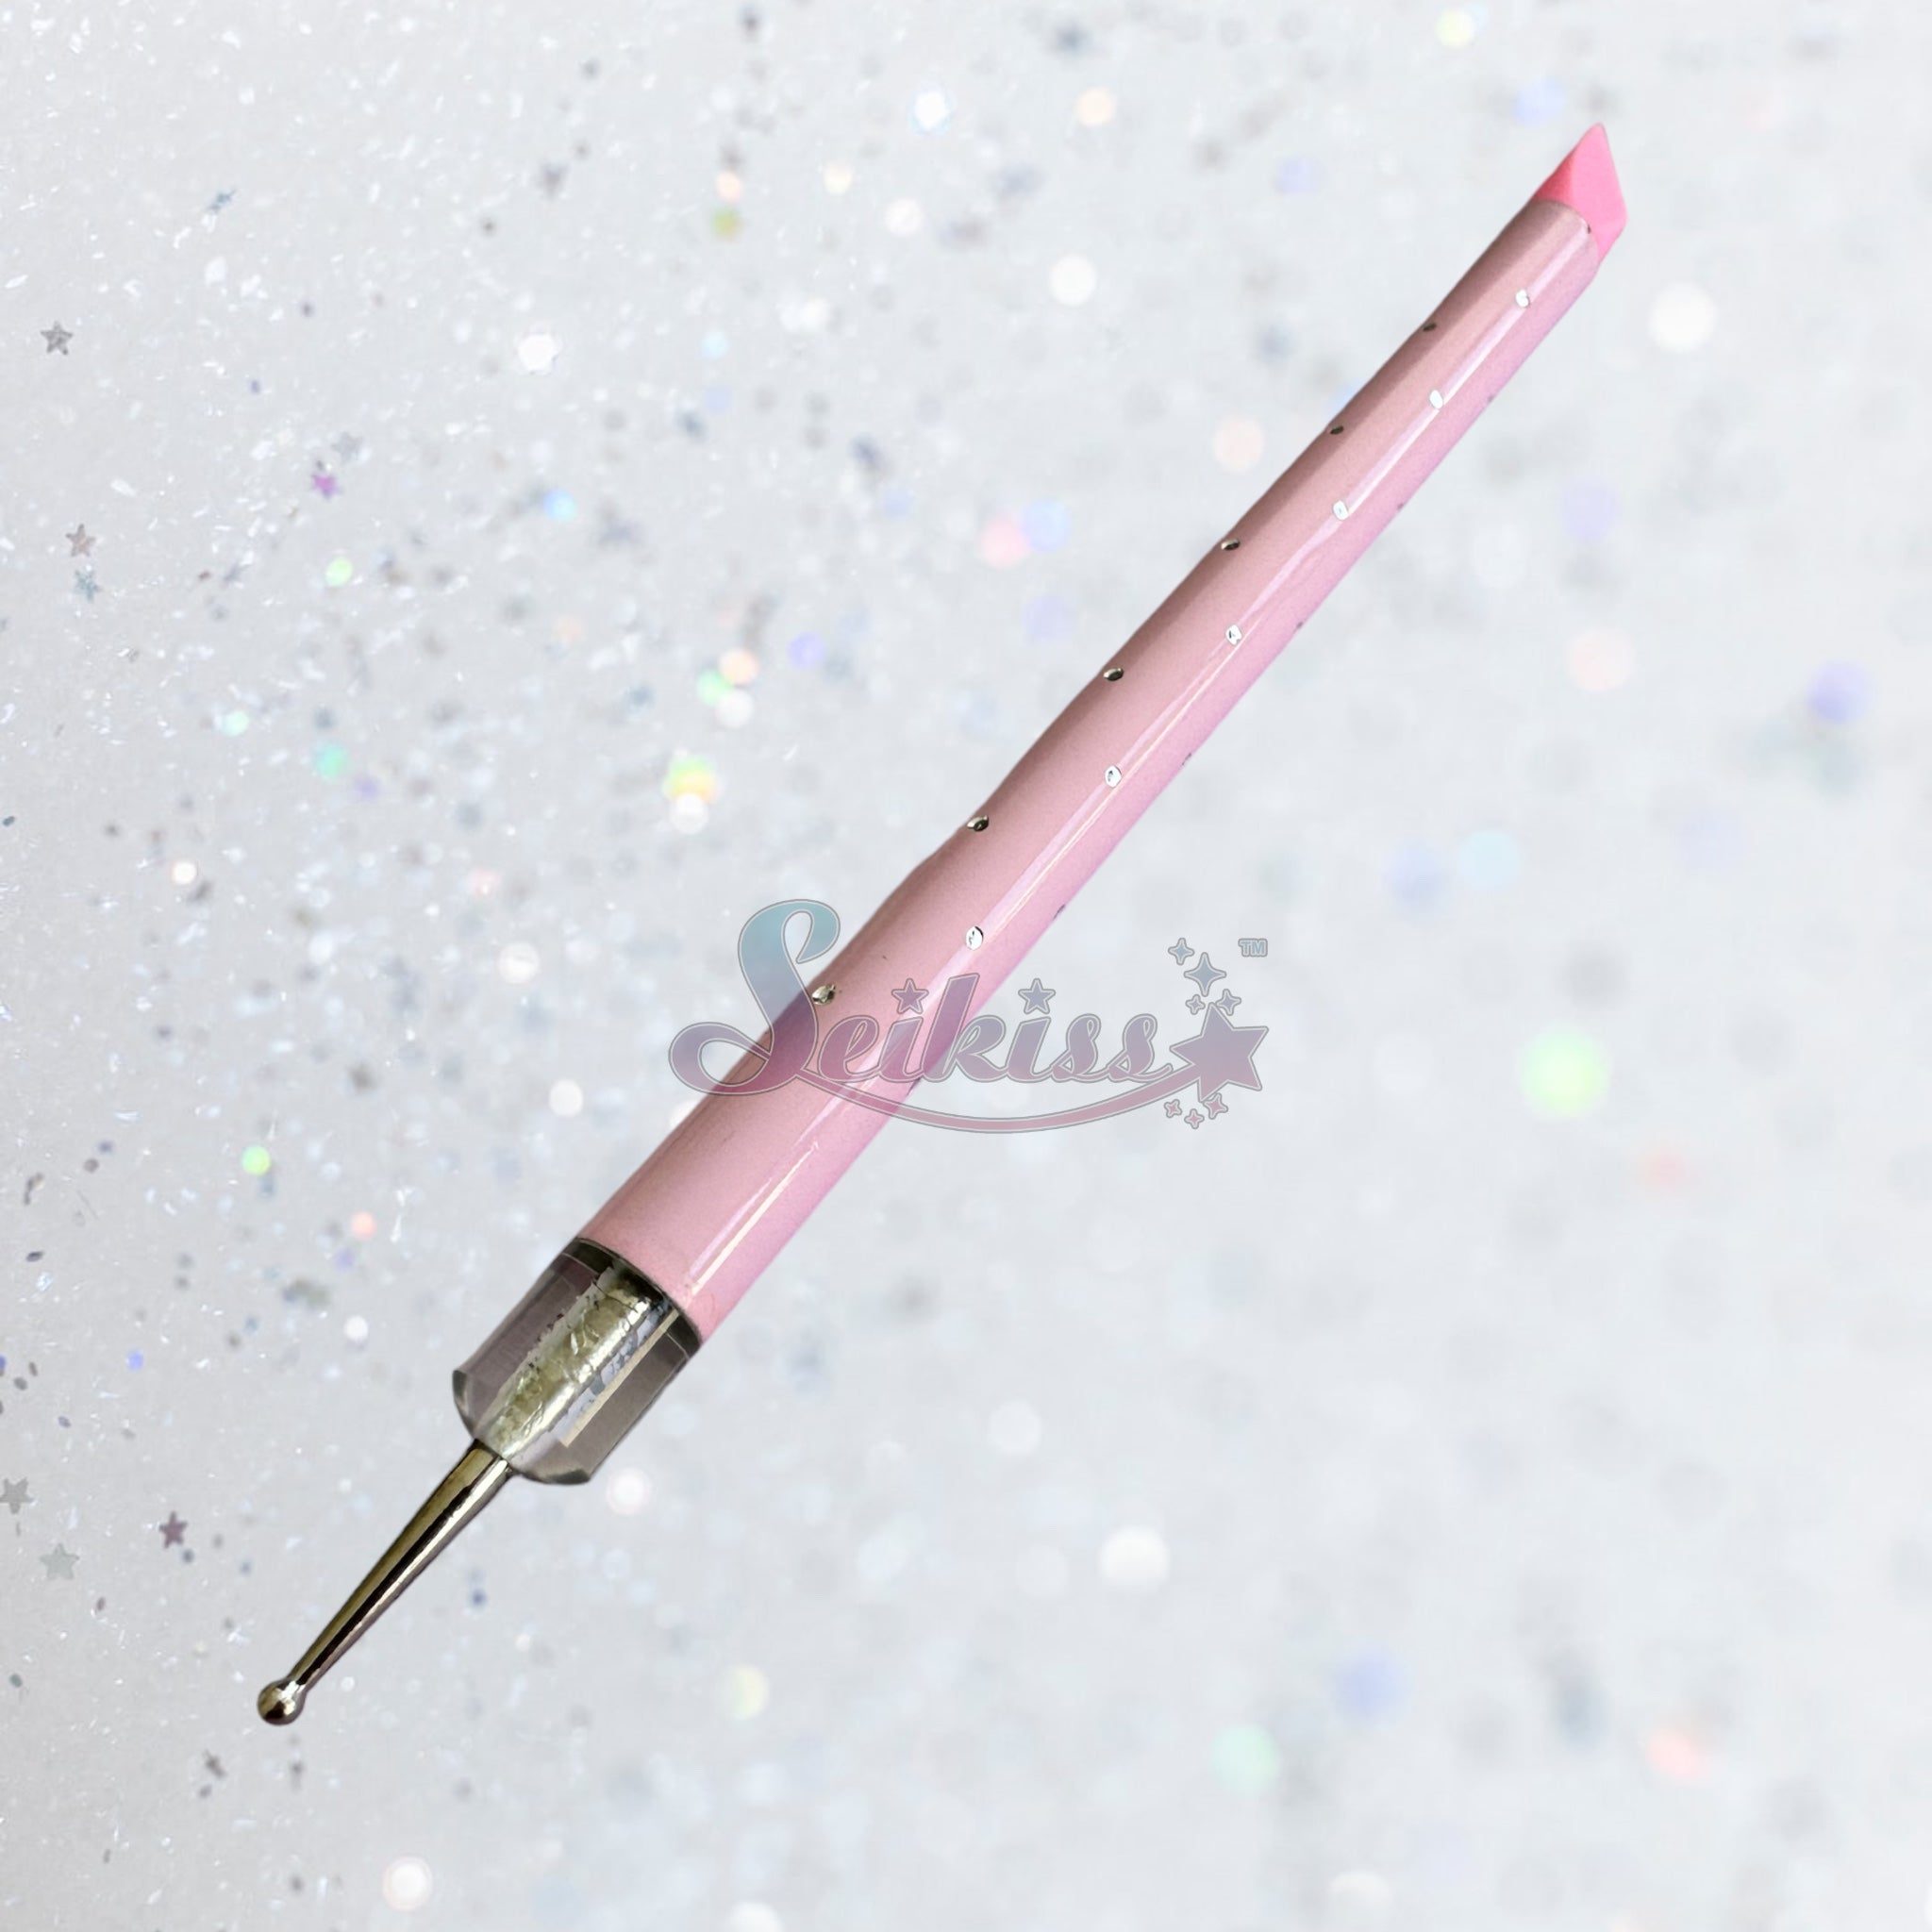 Dual Ended Picker Pen for Glitter, Rhinestones, Flakes